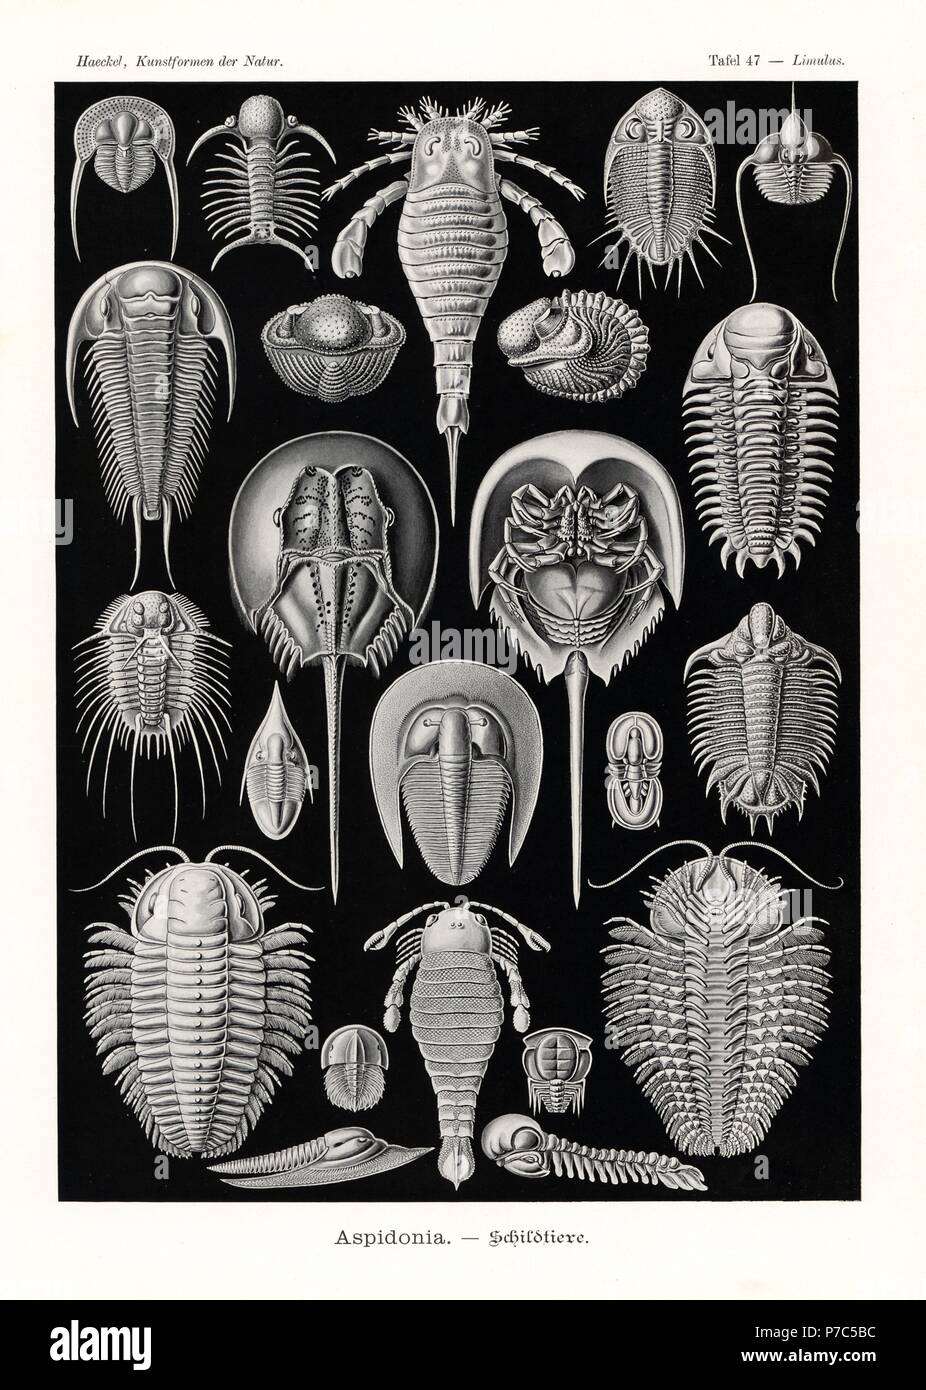 Aspidonia: horseshoe crab, Tachypleus gigas 1-3, extinct sea scorpion, Eurypterus tetragonophthalmus 4, extinct sea scorpion, Pterygotus anglicus 5, and extinct fossil trilobites, Onnia goldfussi 6, Deiphon forbesi 7, Phacops latifrons 8, Asteropyge punctata 9, Raphiophorus rouaulti 10, Paradoxides bohemicus 11, Cheirurus insignis 12, Selenopeltis buchi 13, Megistaspidella extenuata 14, Bohemoharpes ungula 15, Agnostus pisiformis 16, Trochurus speciosus 17, Eccaparadoxides pusillus 18, Sphaerexochus mirus 19 and Triarthrus becki 20. Chromolithograph by Adolf Glitsch from an illustration by Ern Stock Photo